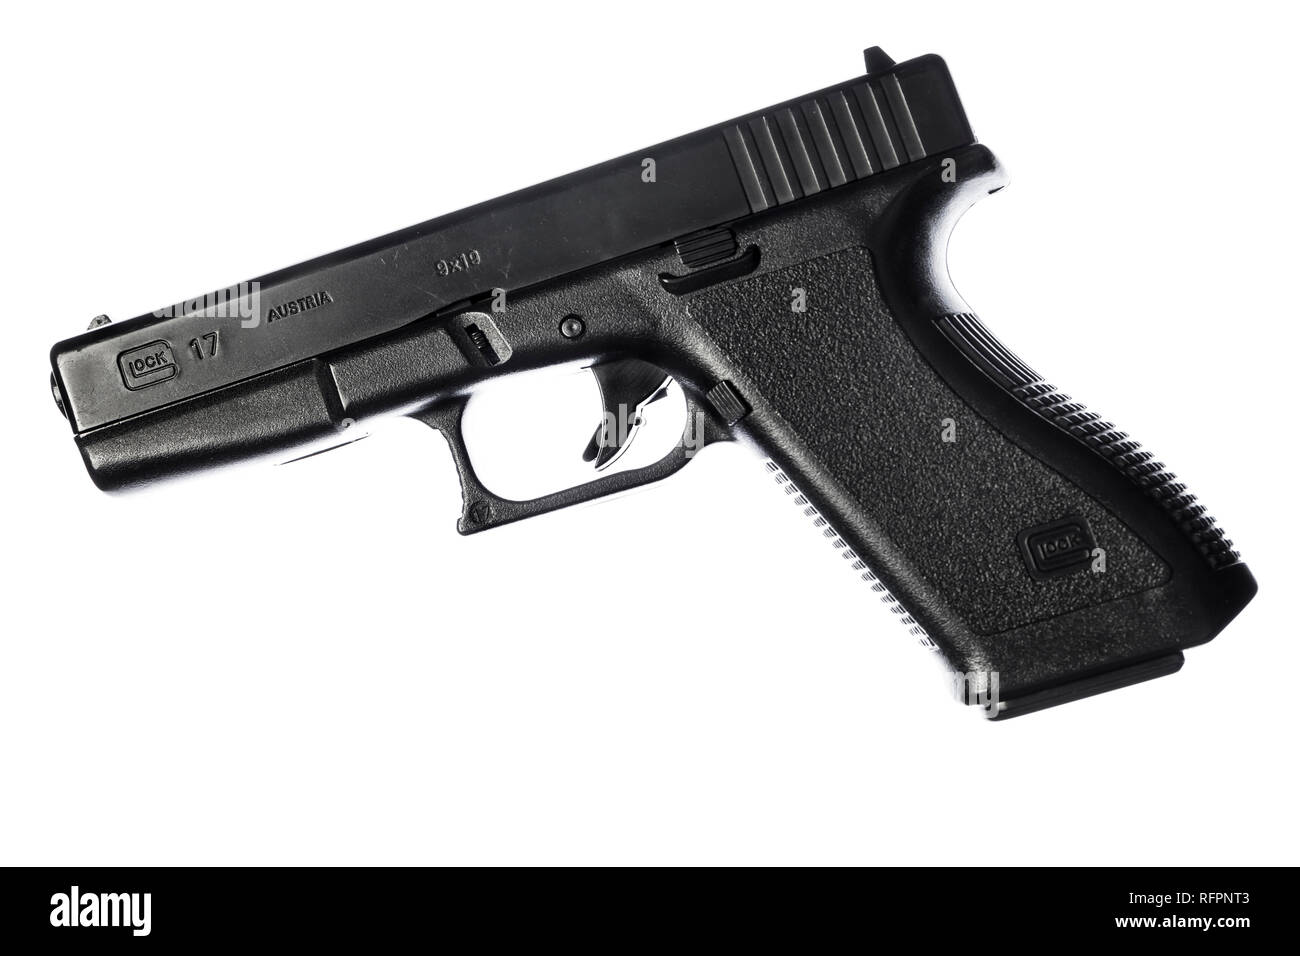 Replica Glock 17 9mm pistol. Stock Photo